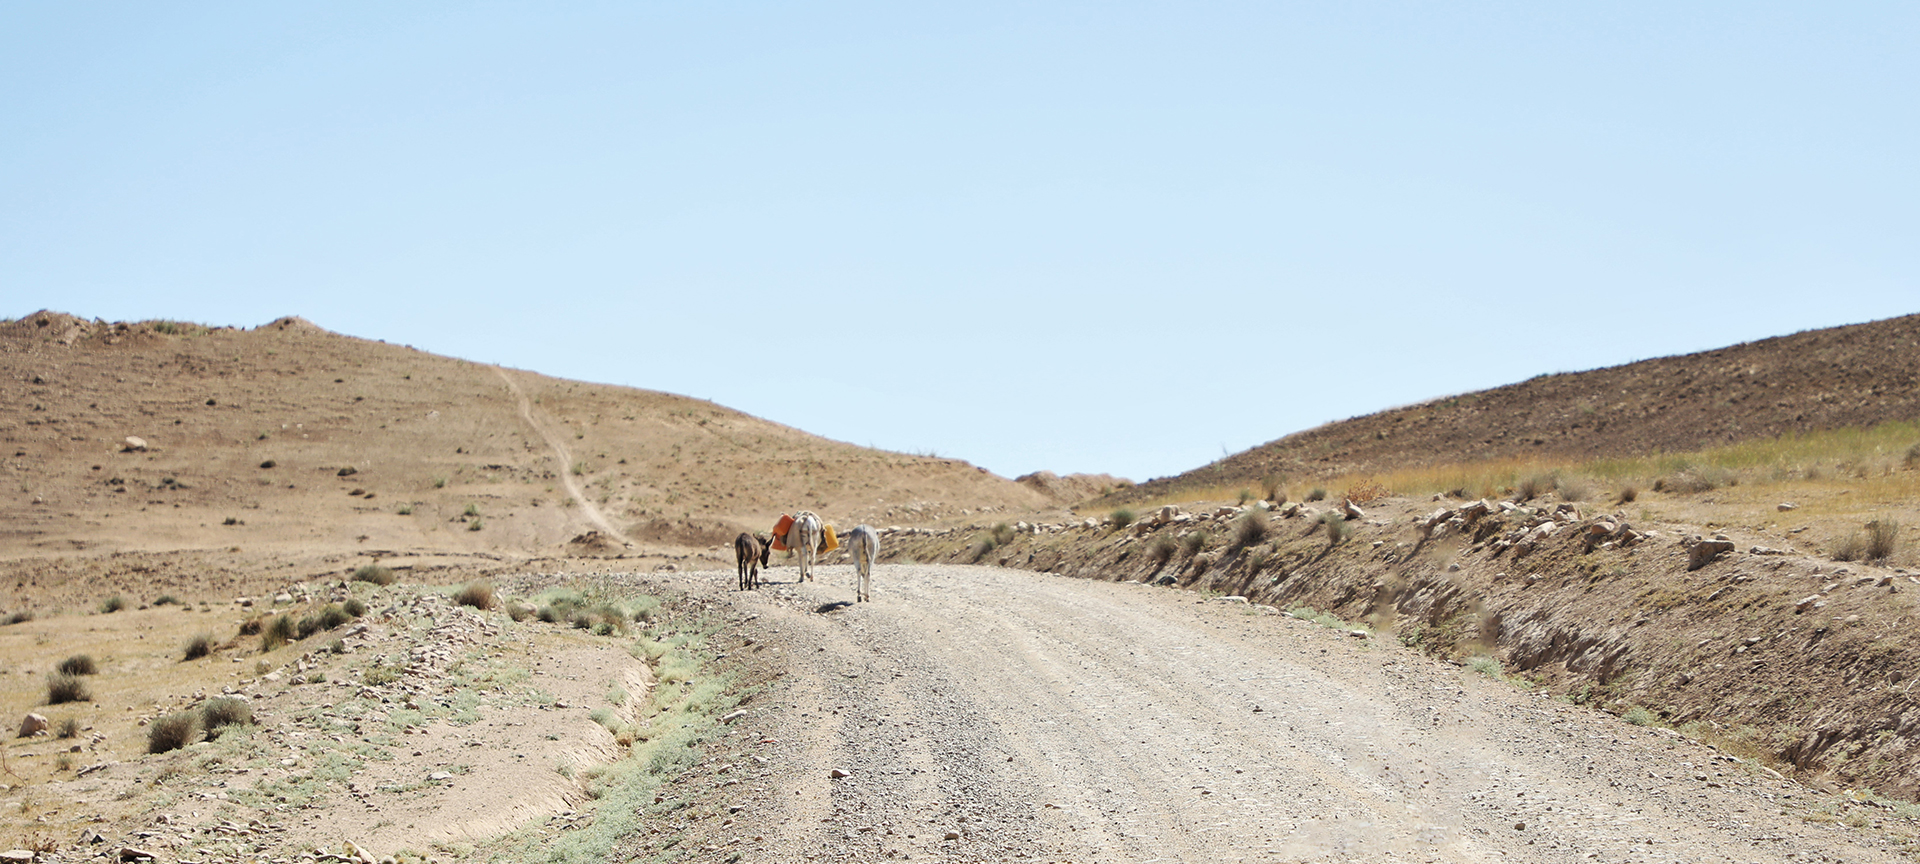 Three donkeys walking along a dirt road in a dry desert area. 